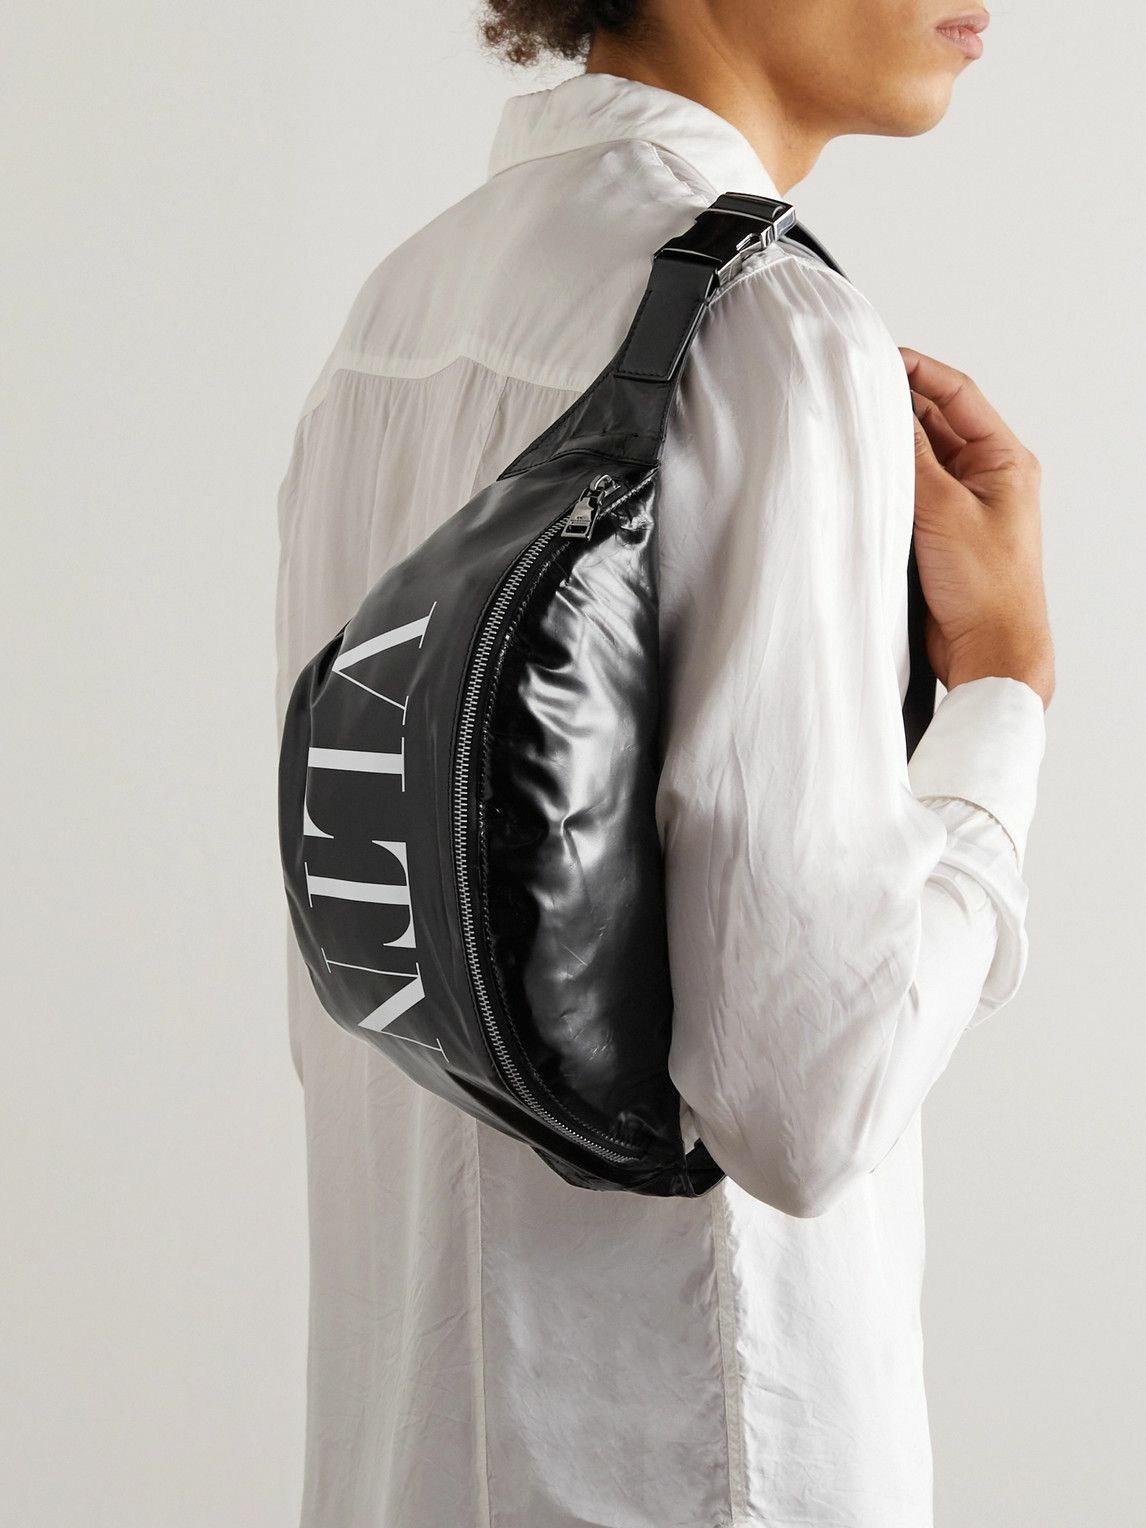 Valentino Garavani VLOGO Print Backpack - Black for Men